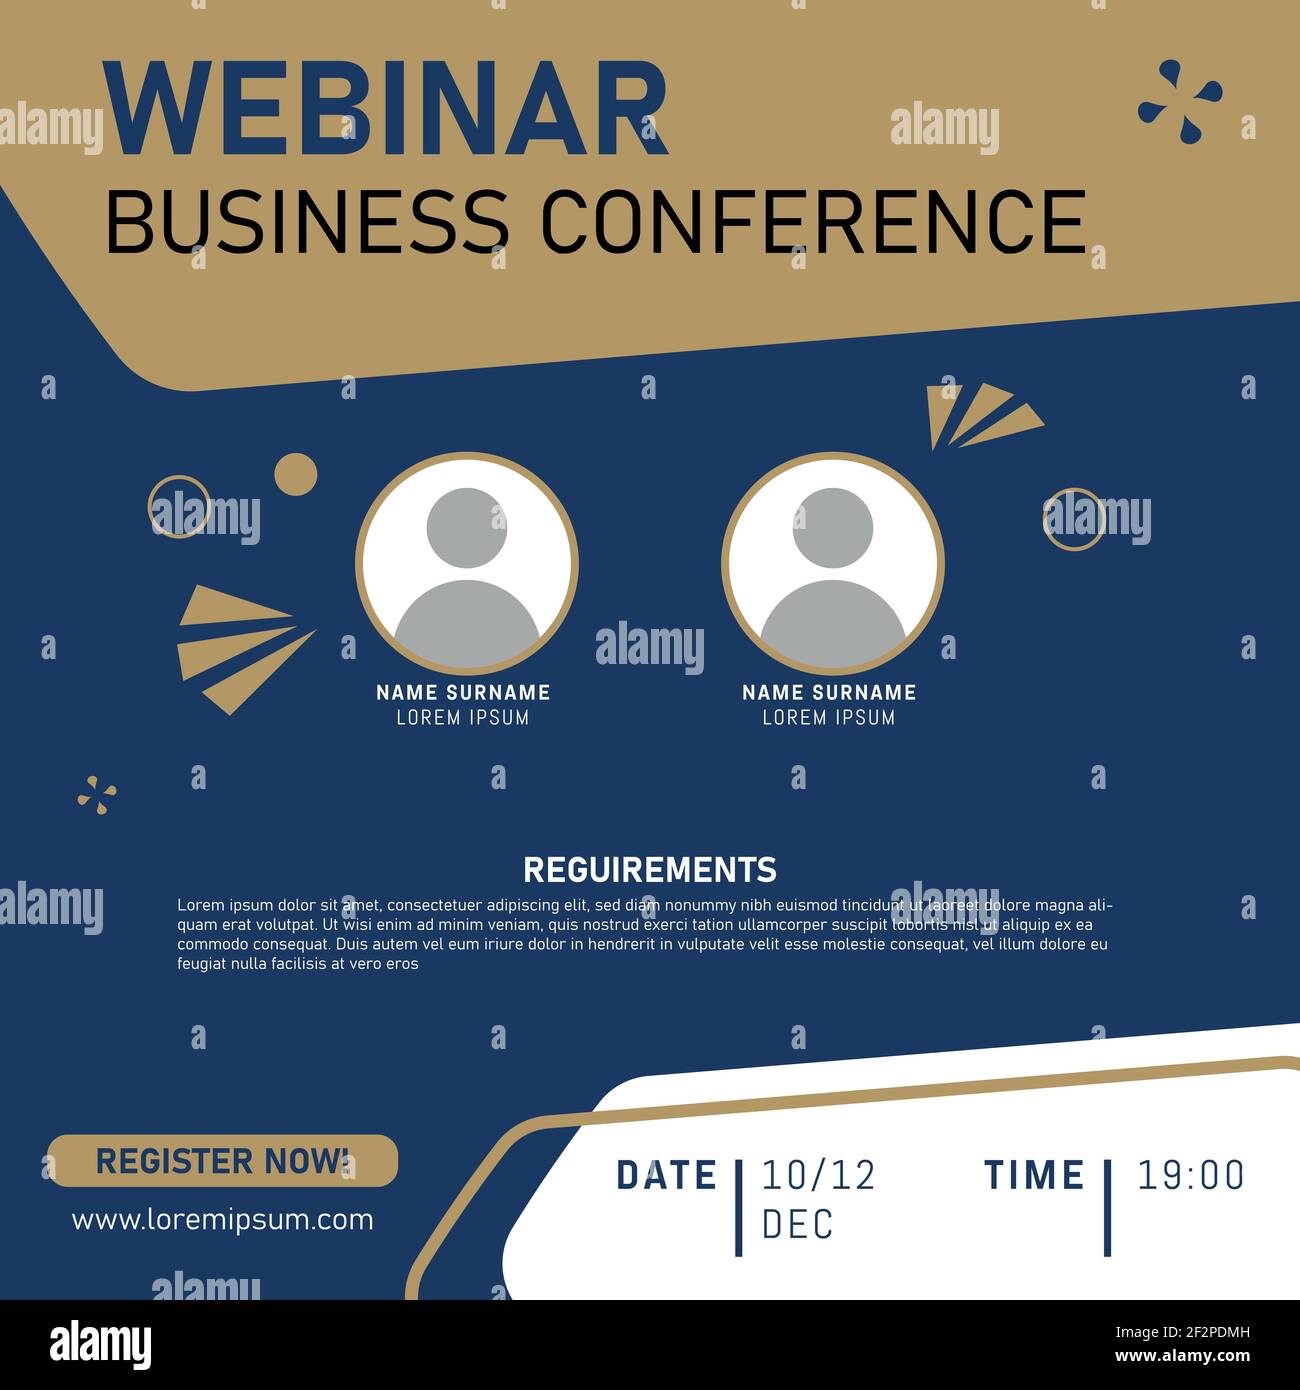 Business Conference. Live webinar invite template. Banner live webinar promotion for social media. Eps 10 Stock Vector